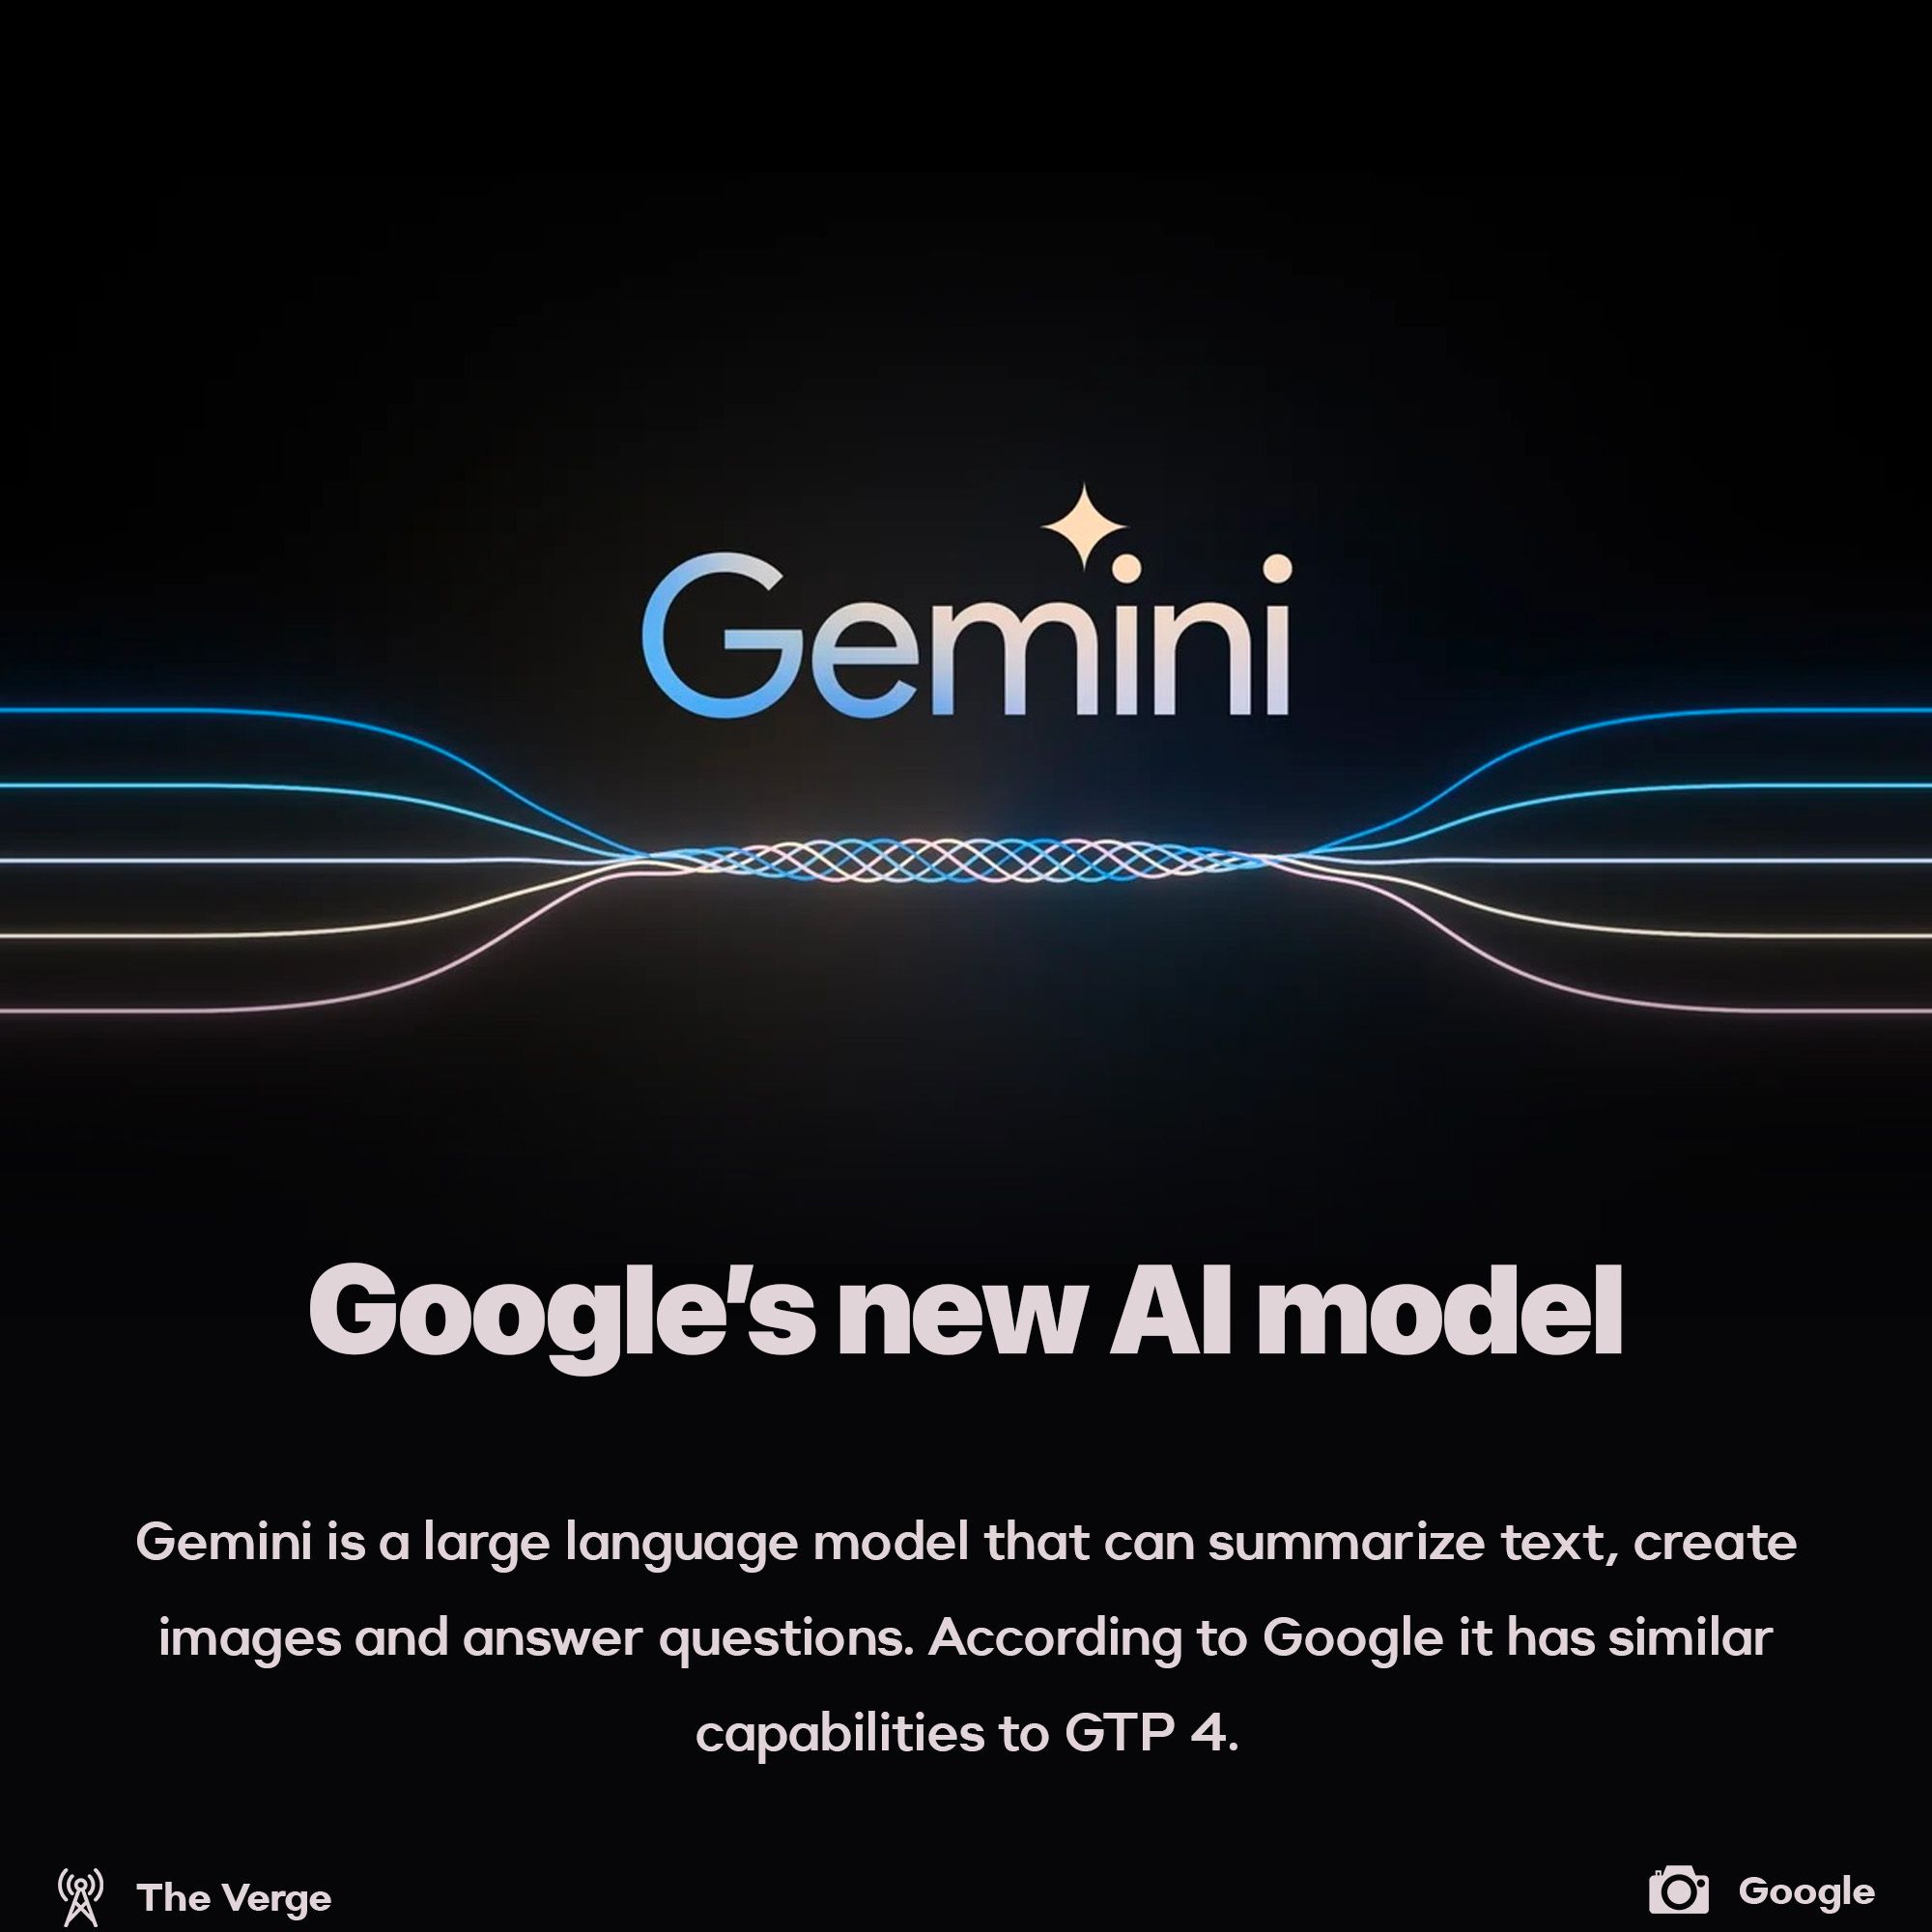 Google revealed new AI model called Gemini